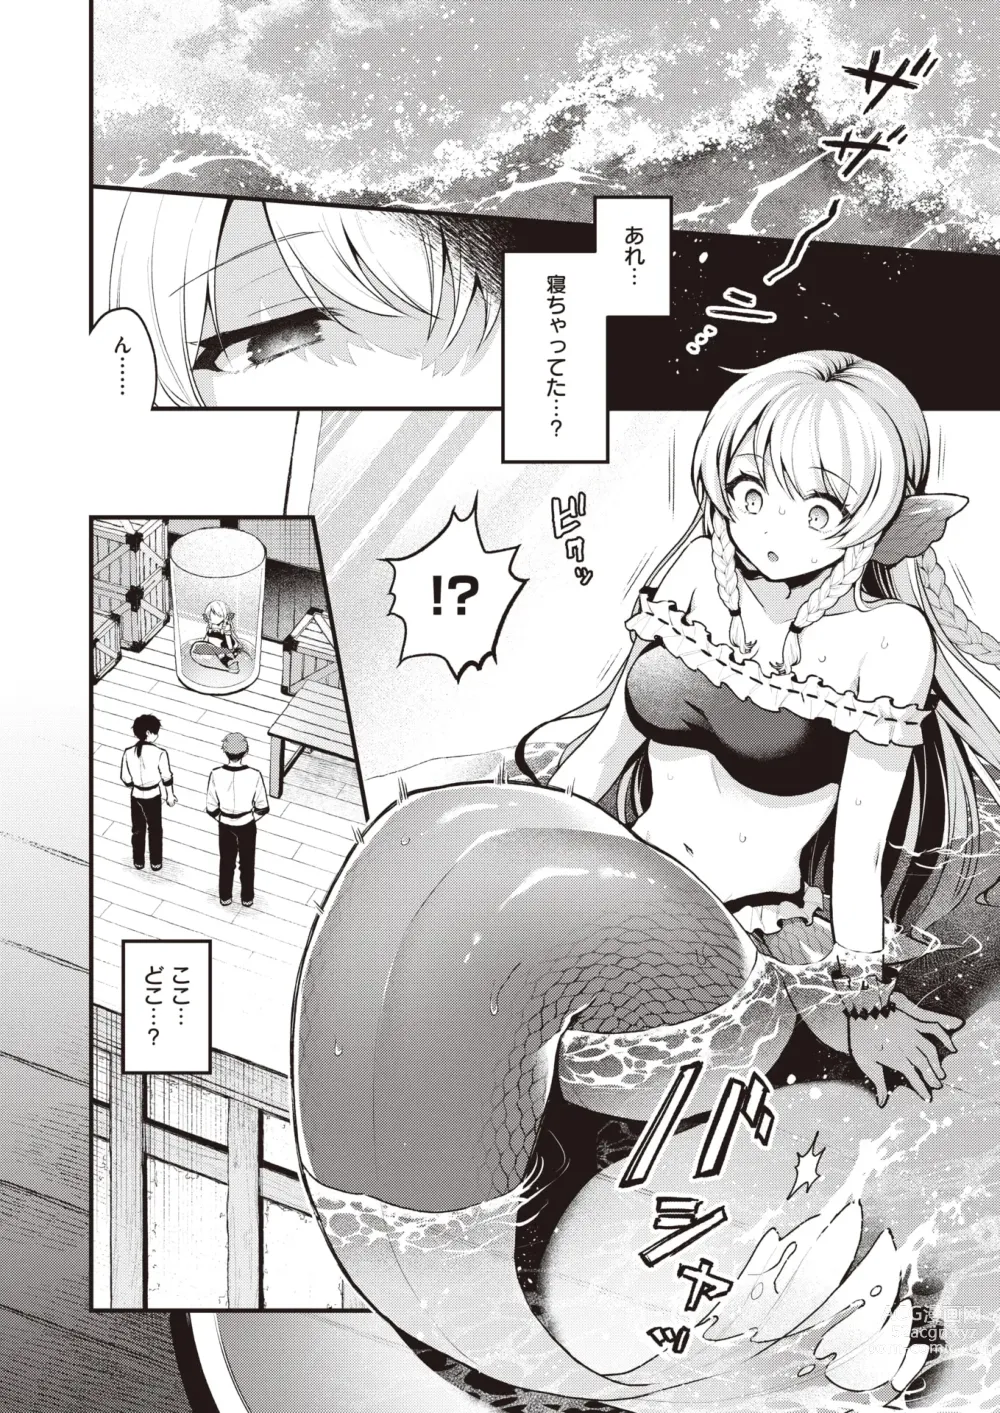 Page 3 of manga Isekai Rakuten Vol. 31